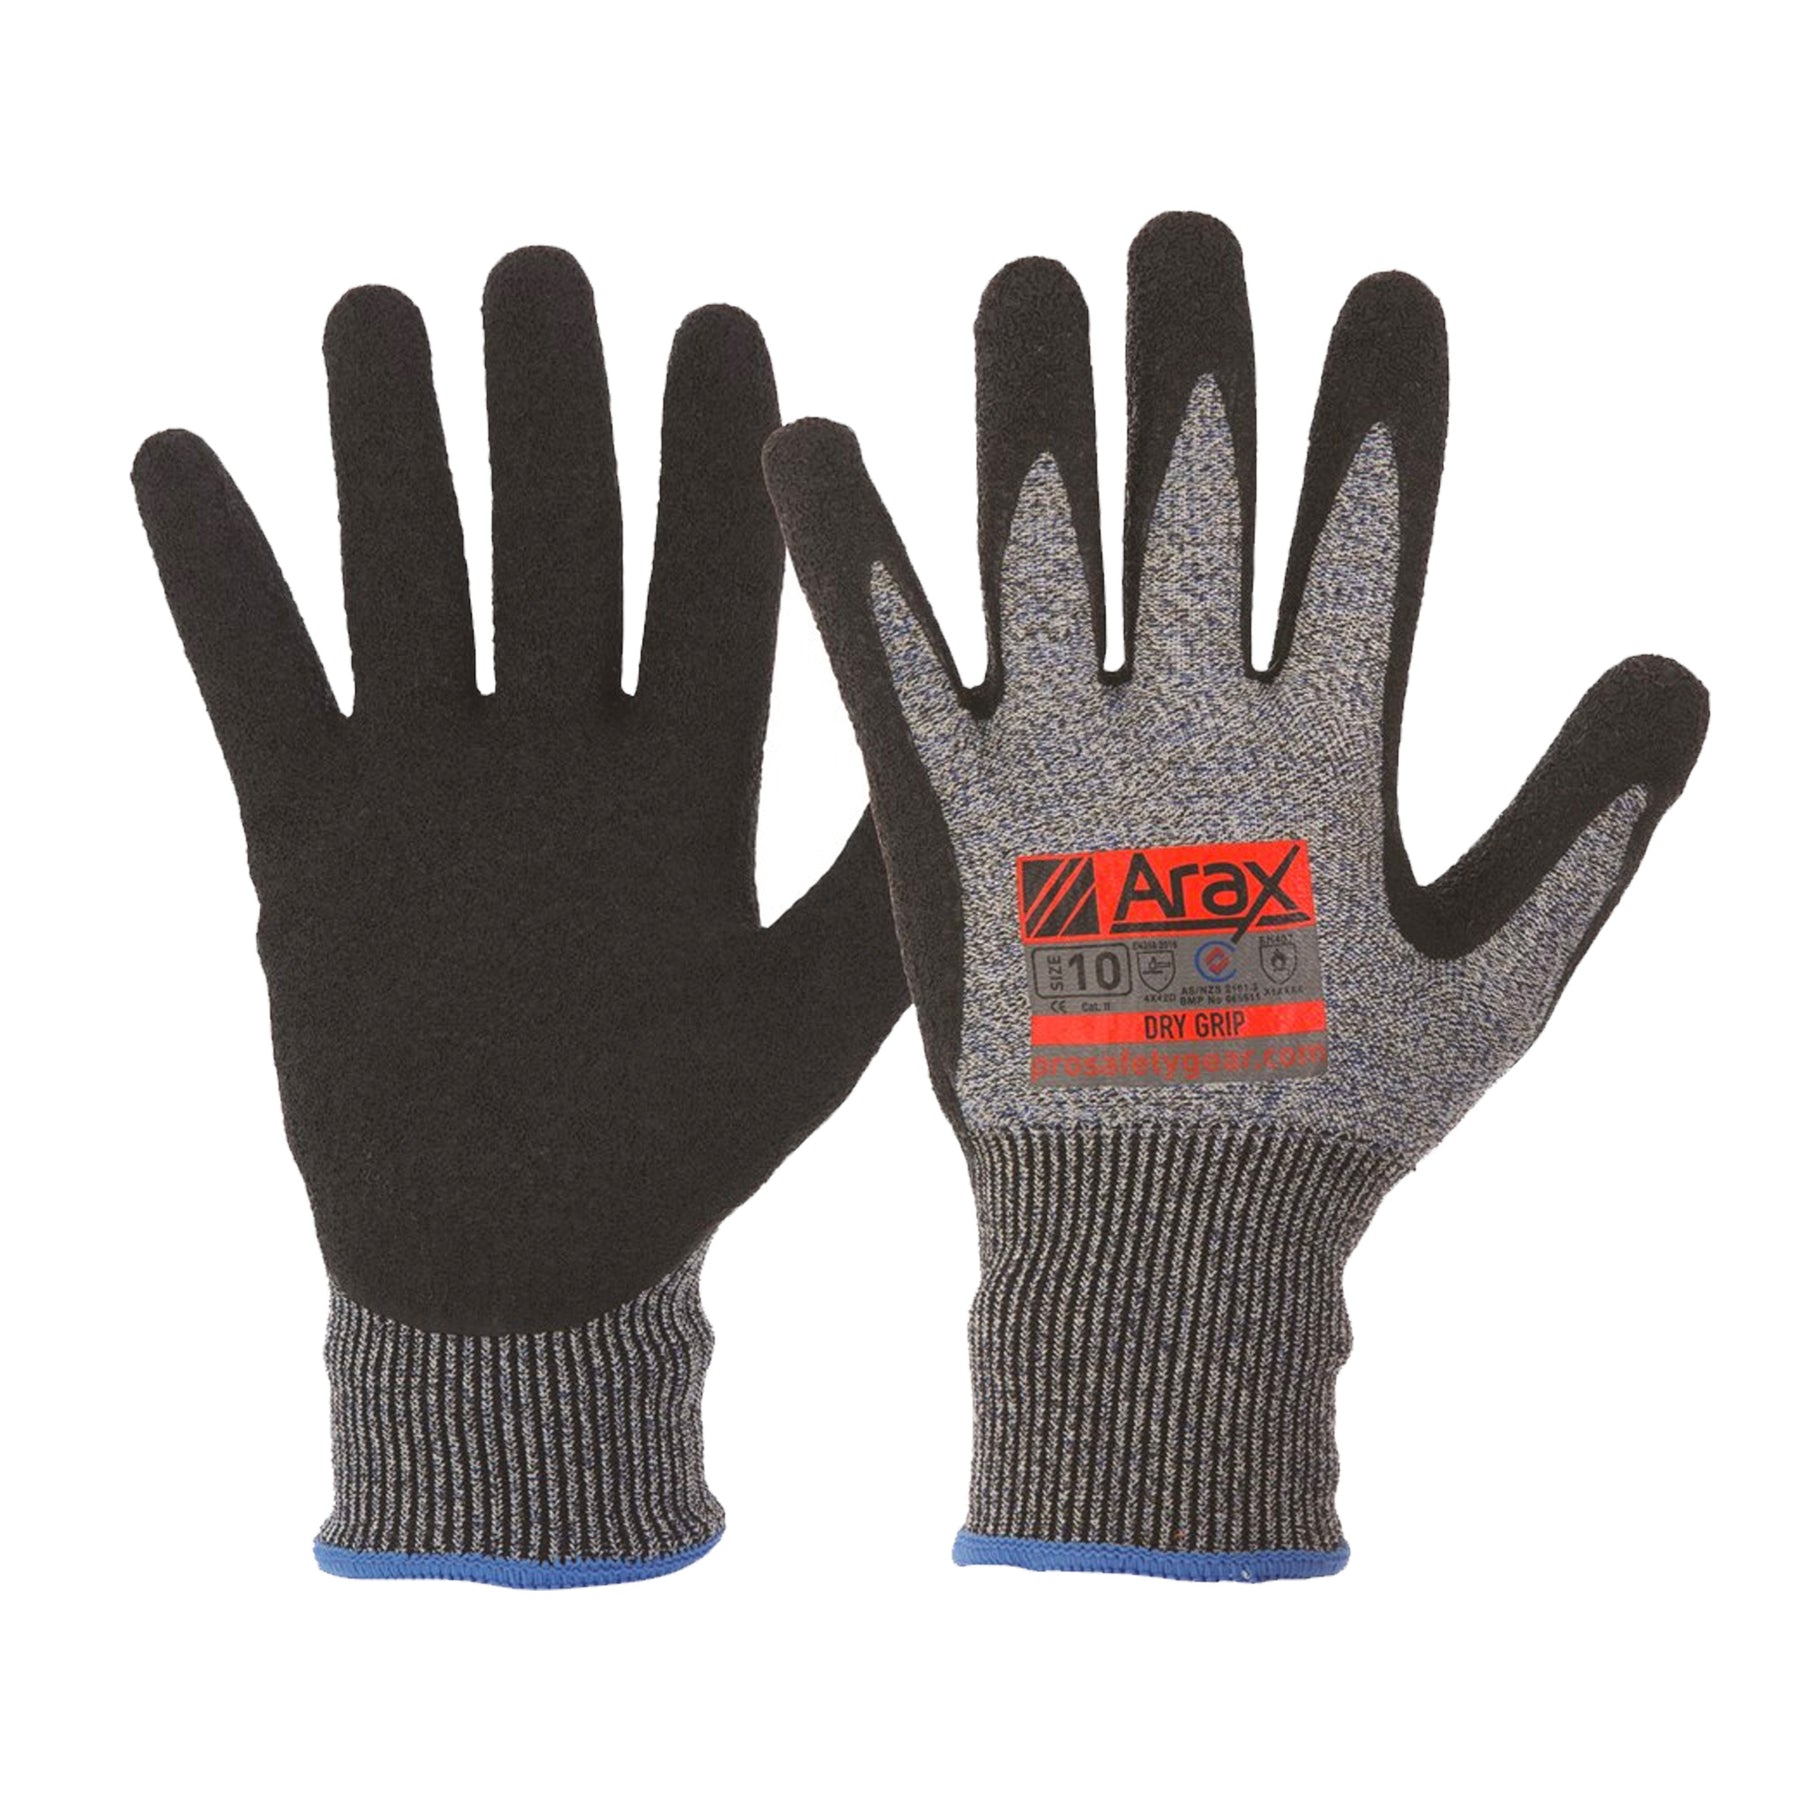 arax dry grip gloves